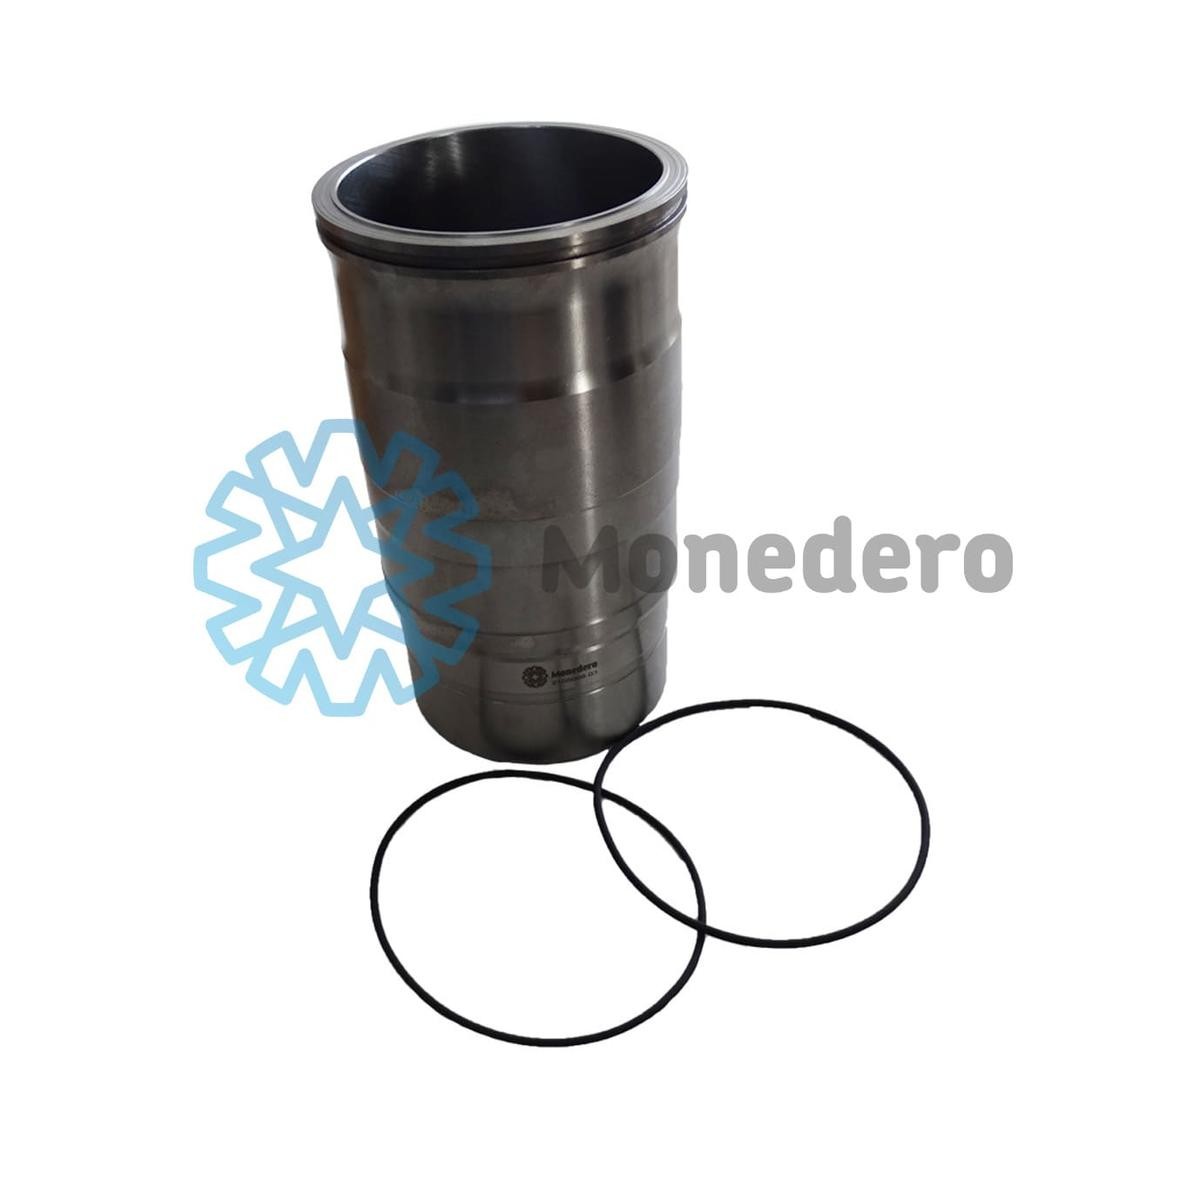 MONEDERO 40011300004 Cylinder Sleeve 2206260